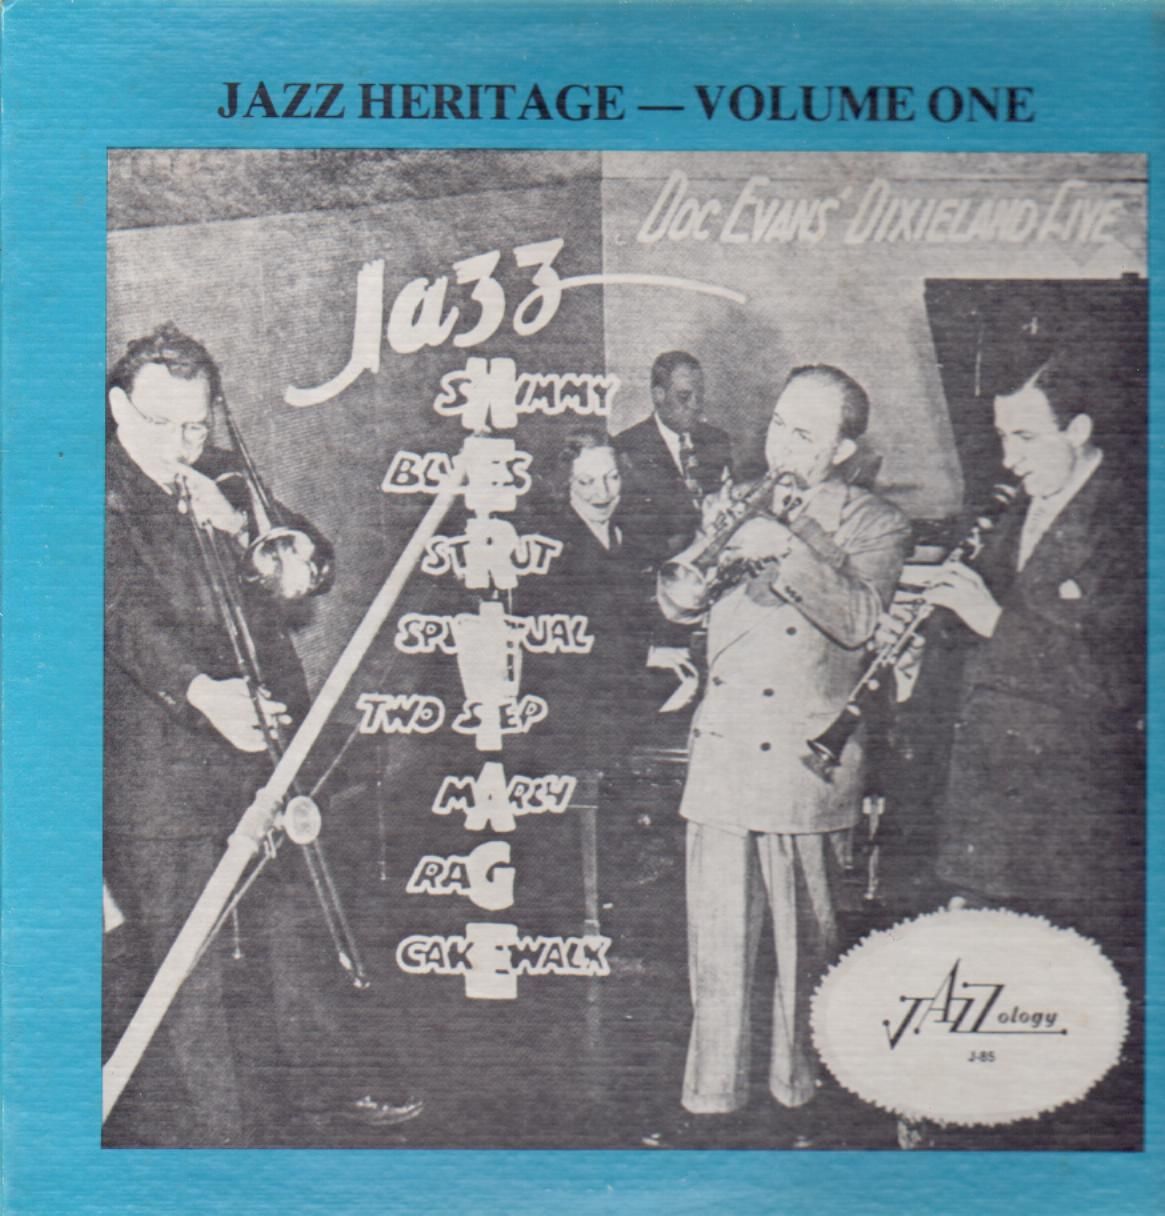 DOC EVANS - Jazz Heritage - Volume One cover 